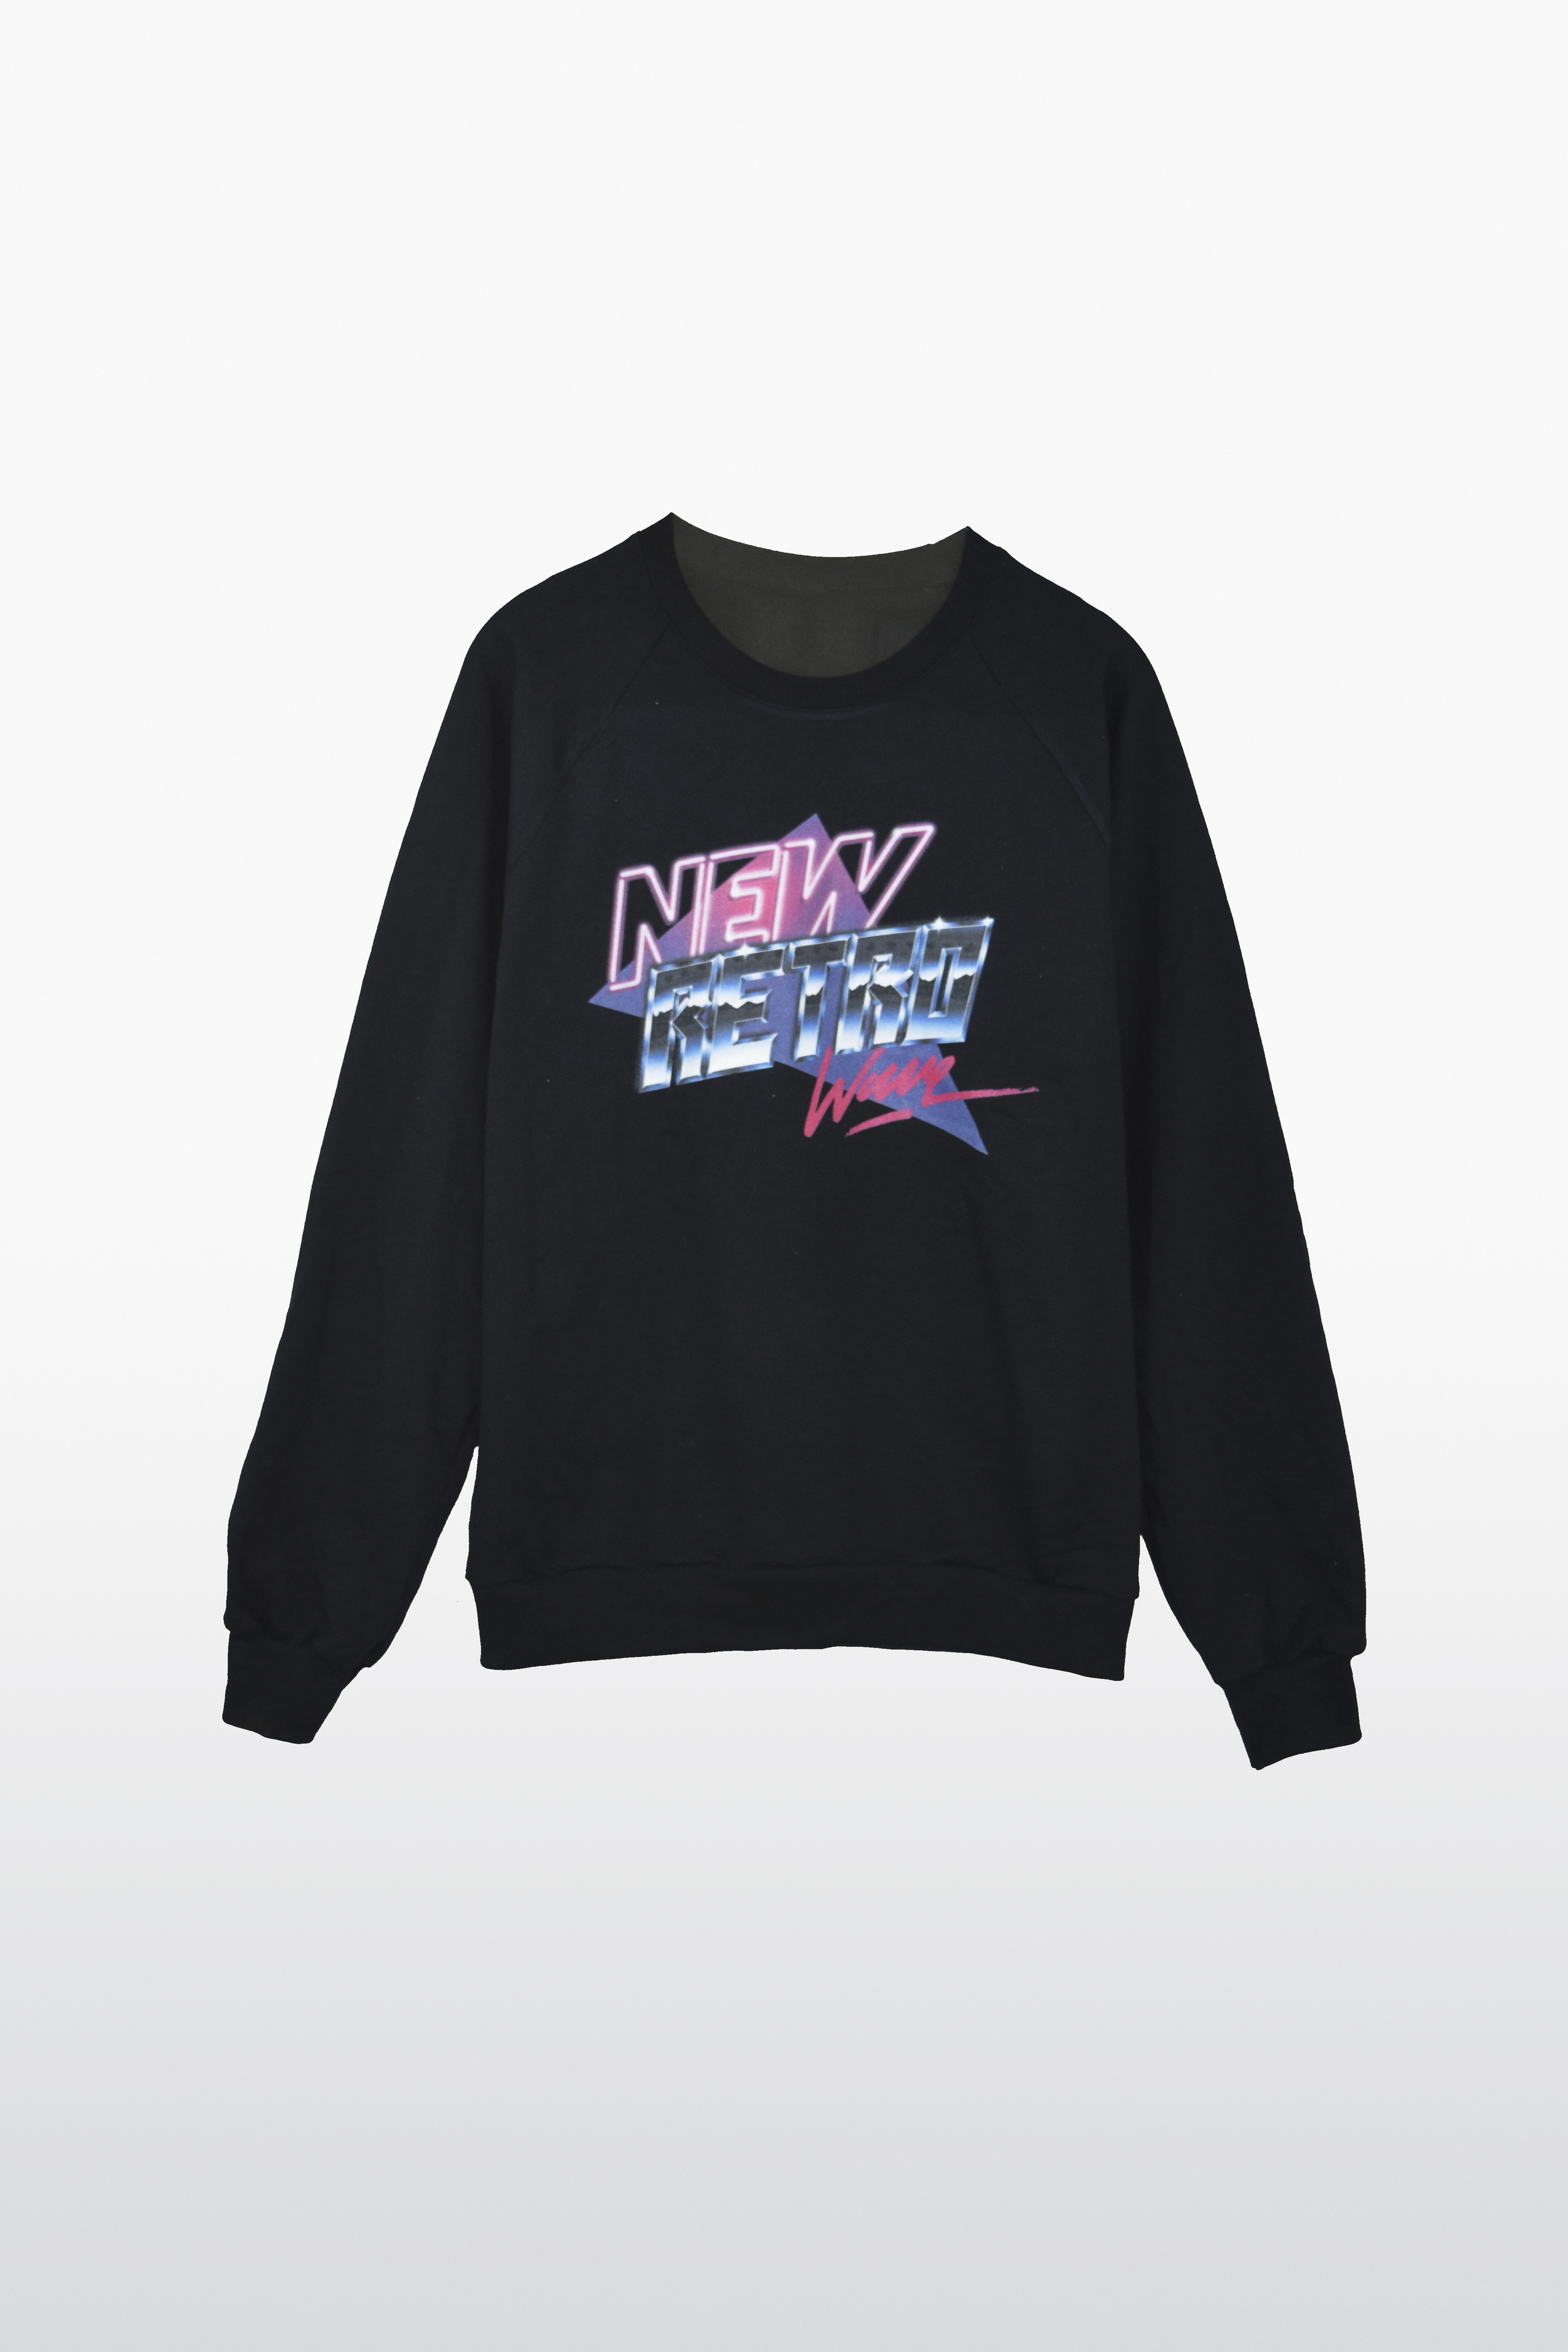 New+Retro+Wave+Sweatshirt?format=original - Akade Wear